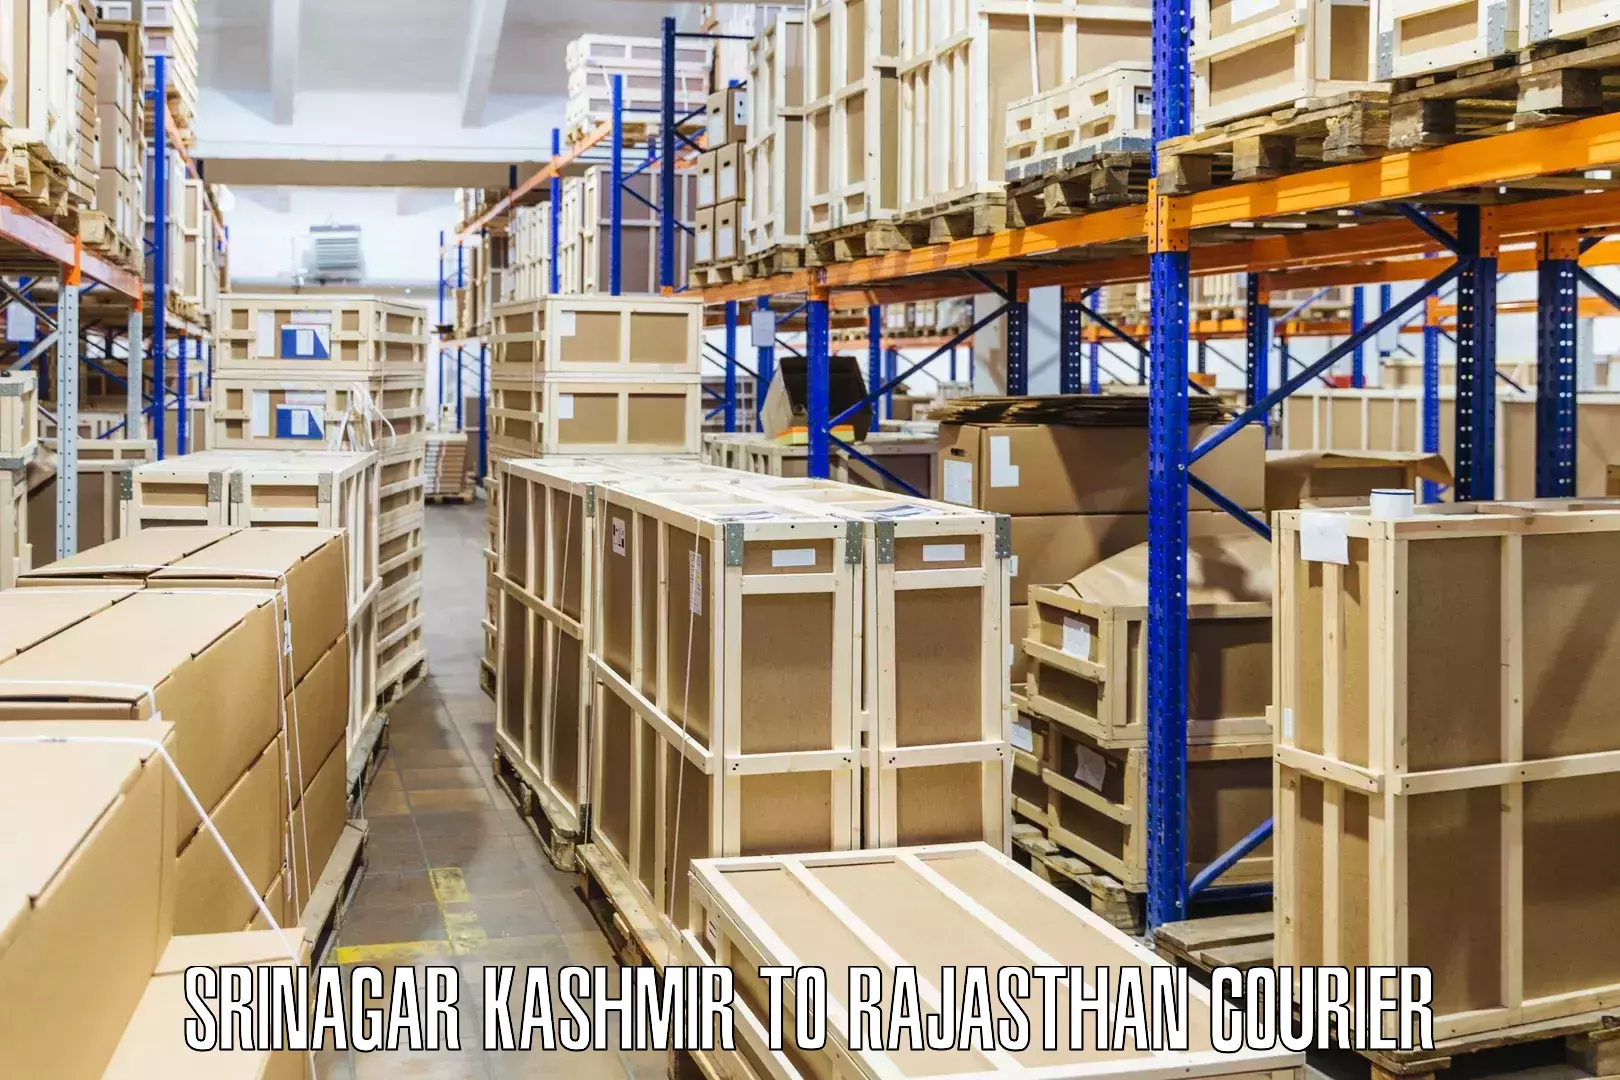 Multi-national courier services Srinagar Kashmir to Bikaner